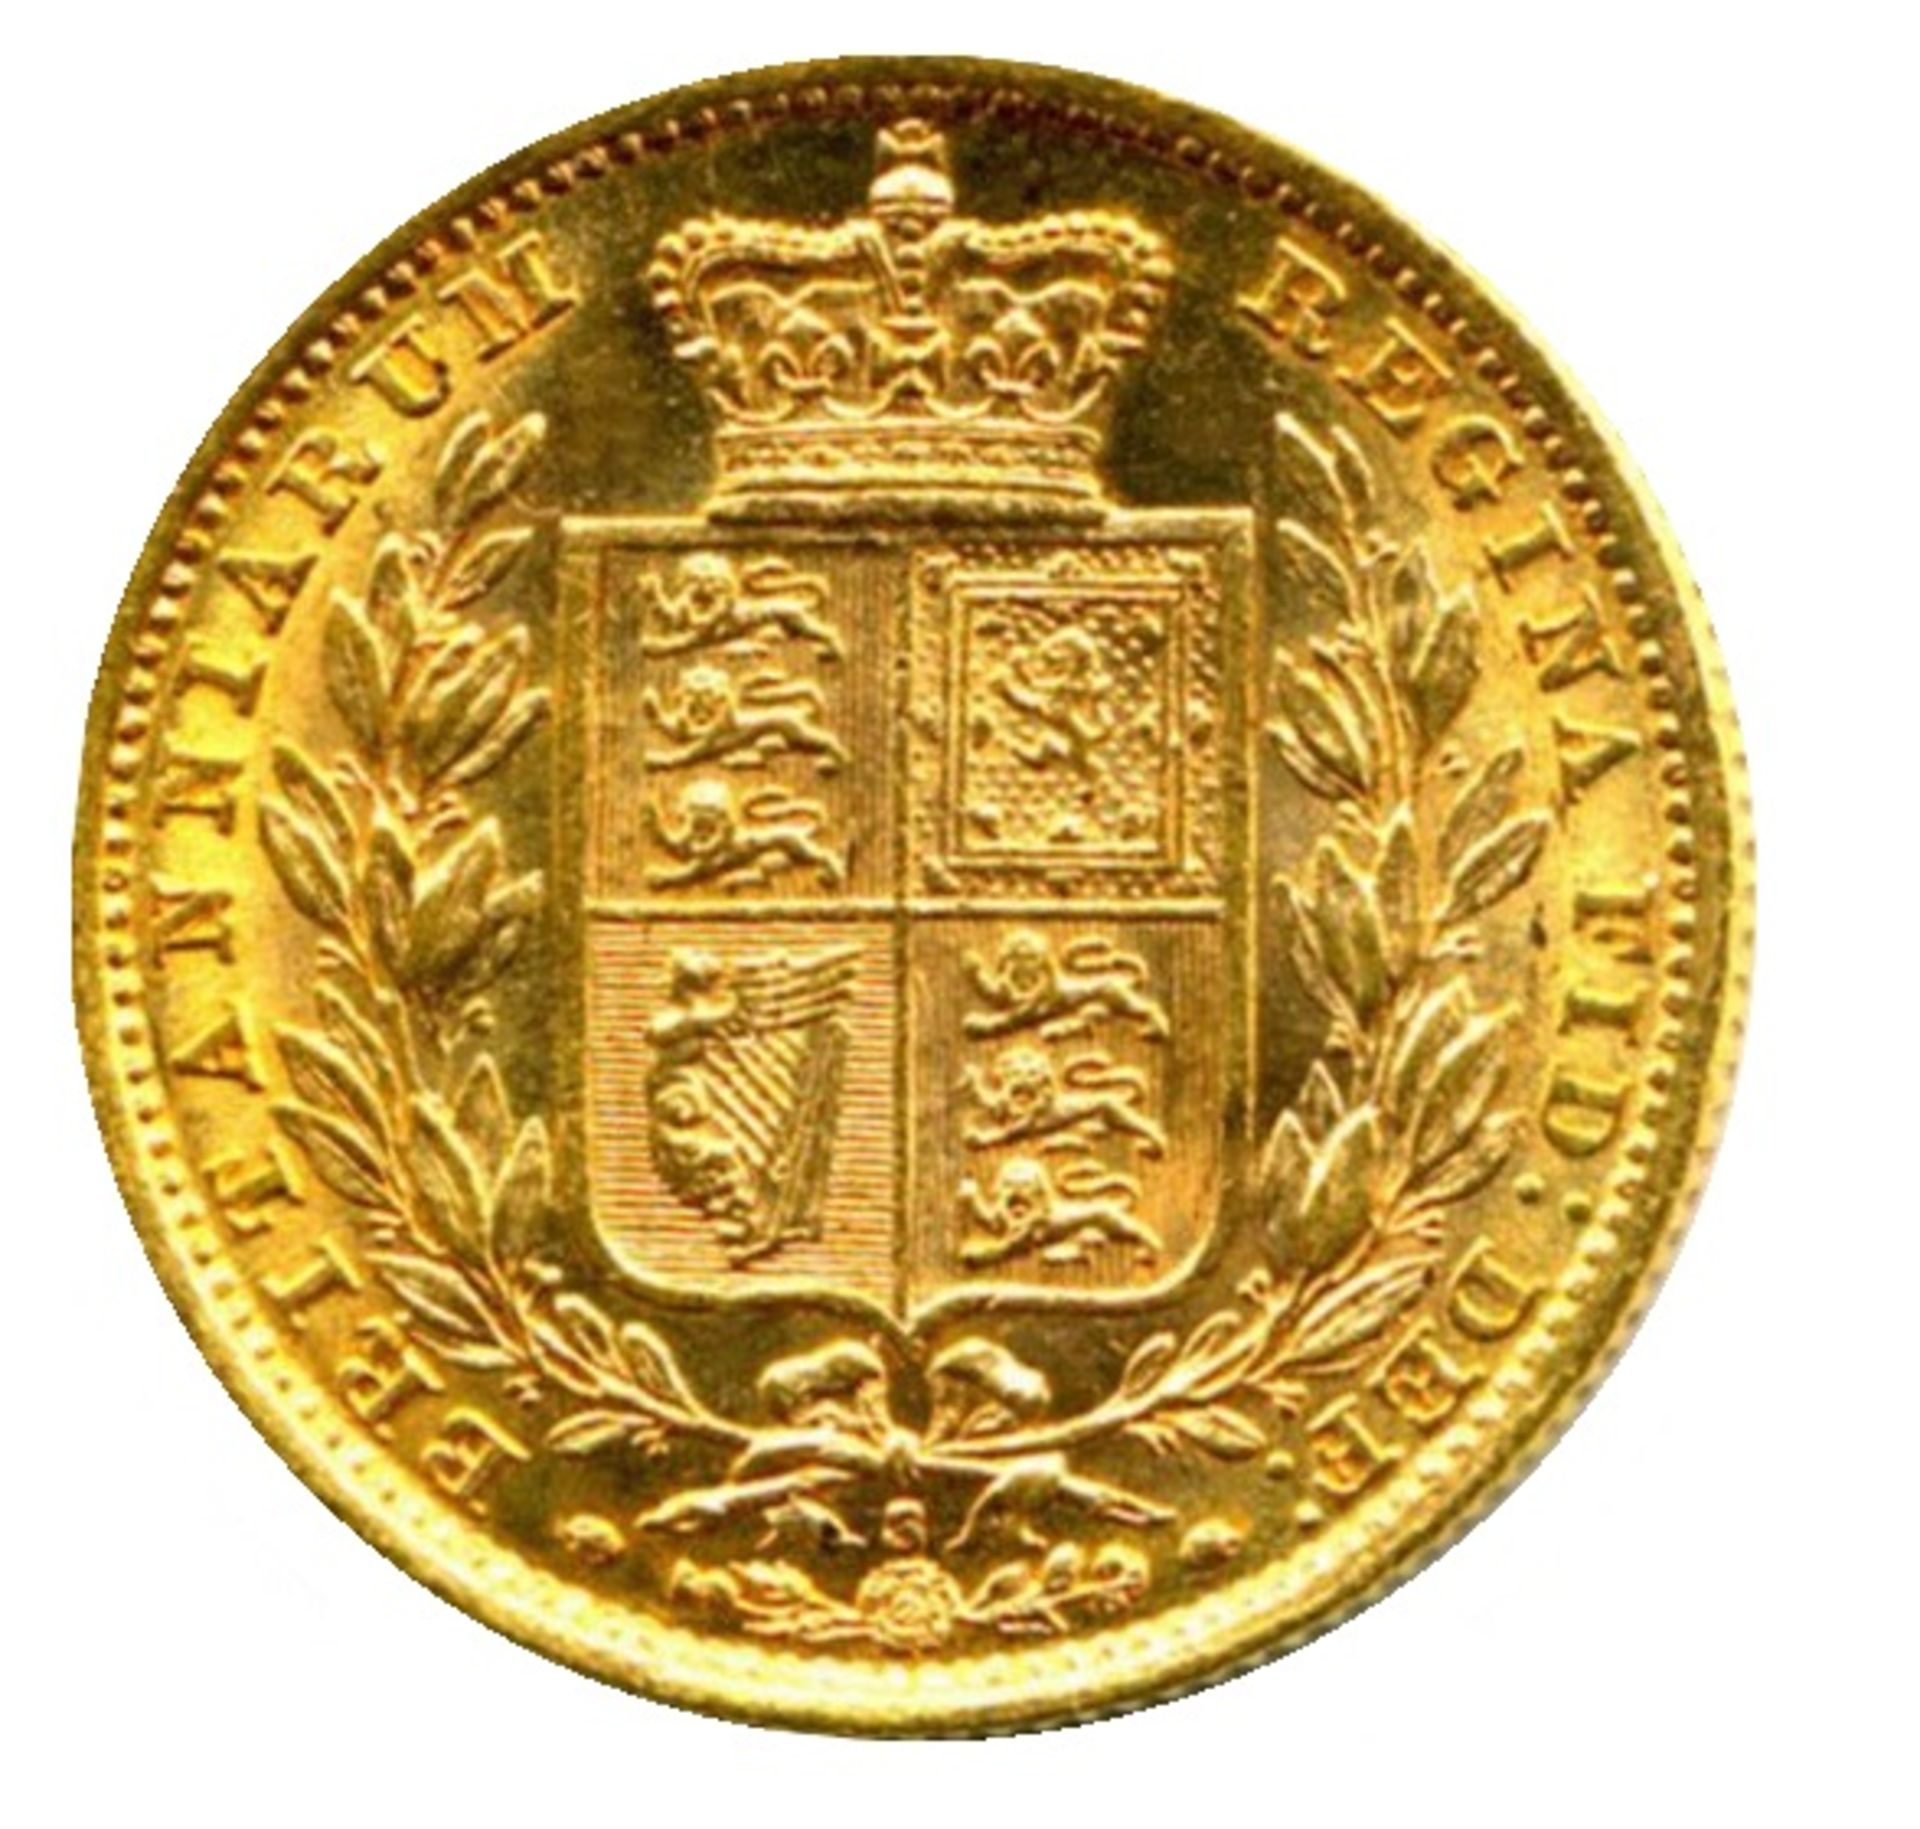 1881 Queen Victoria Sovereign (Sydney) - Image 2 of 2